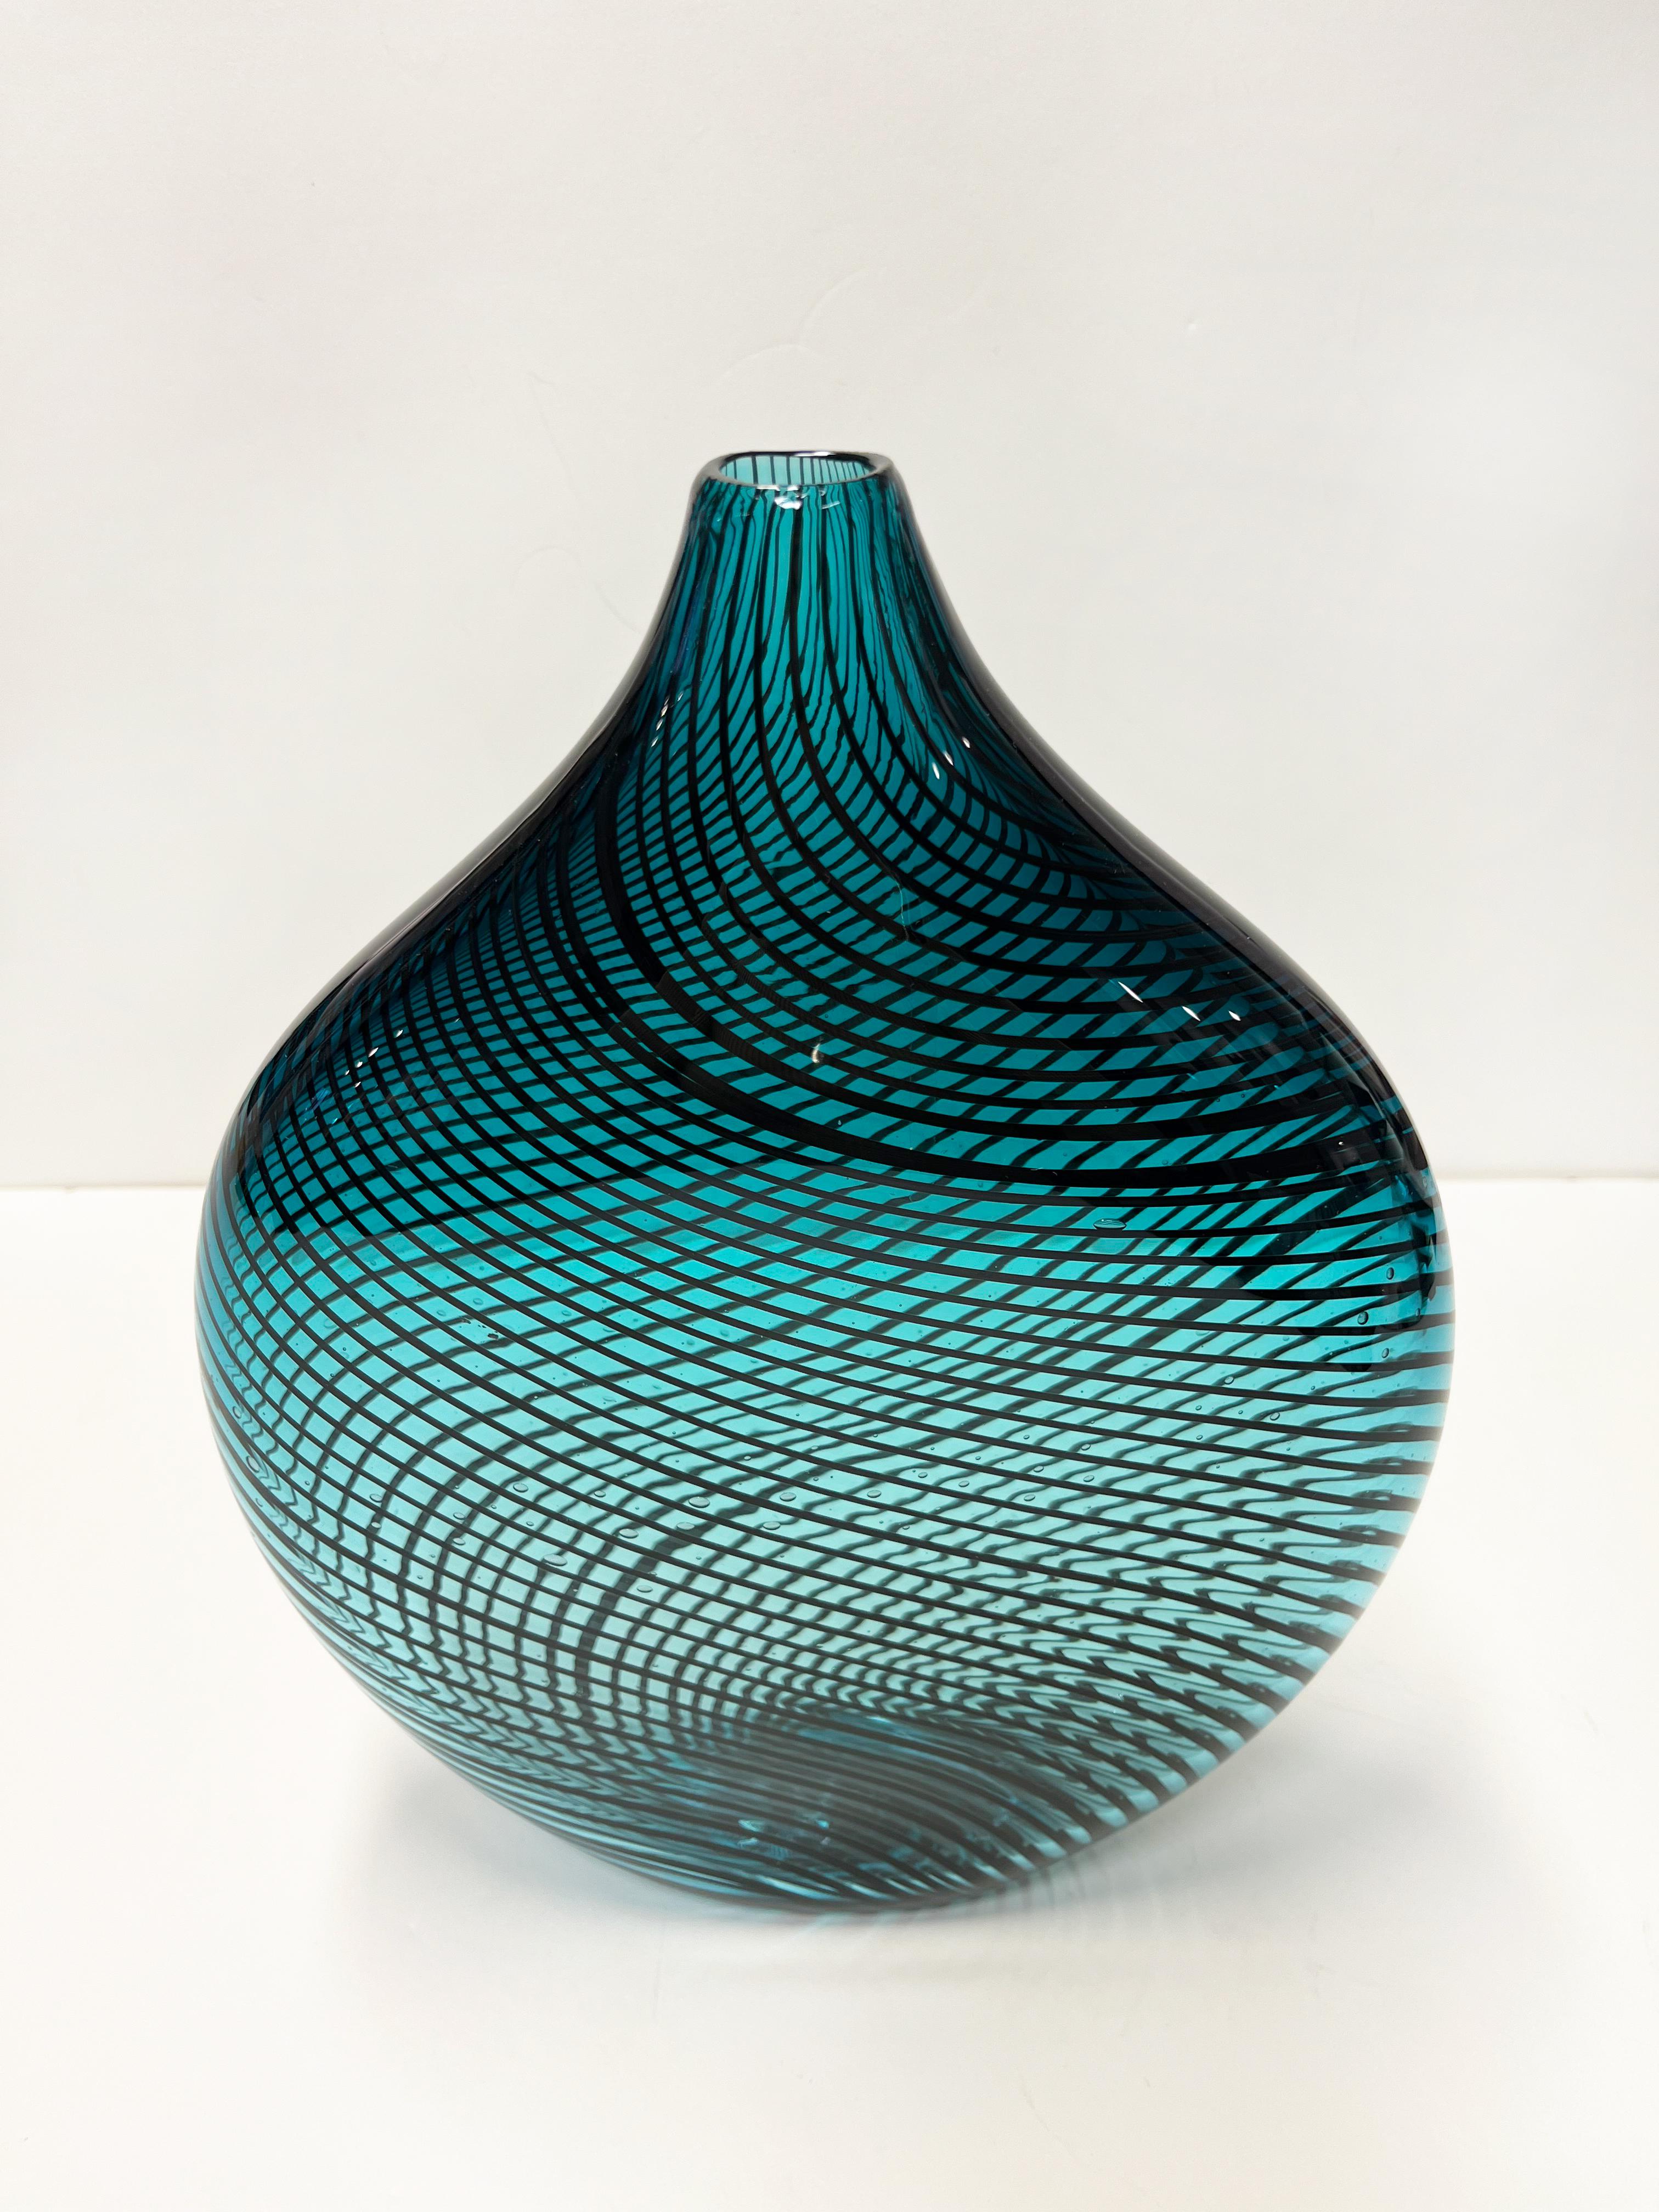 Lagoon swirl cane glass vessel decorative object - Gray Abstract Sculpture by Alyssa Getz & Tom Cudmore